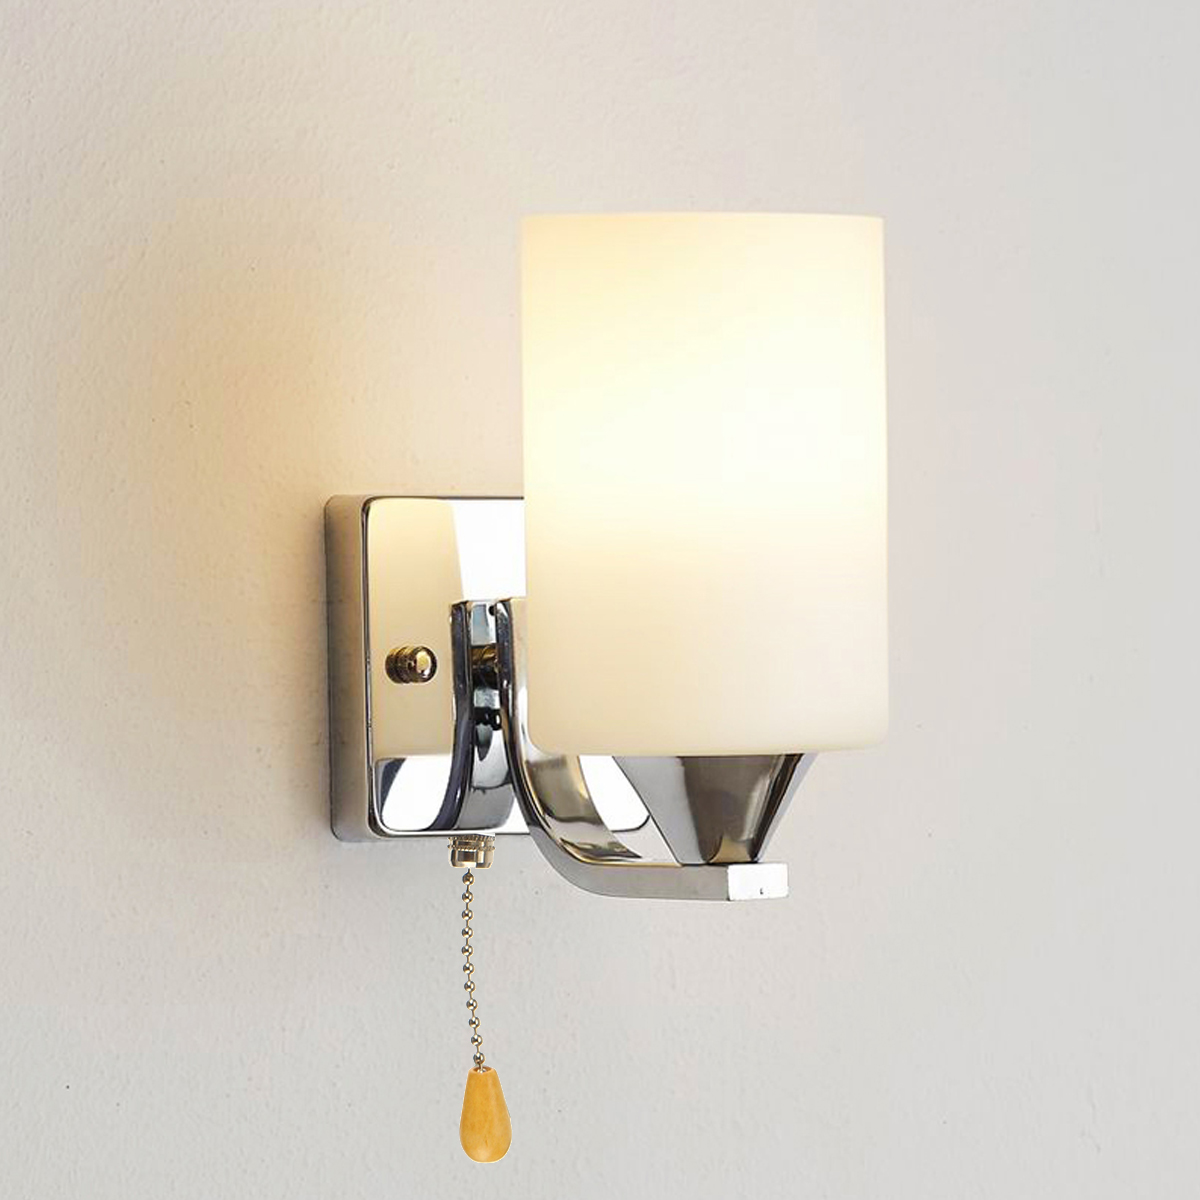 Glass-Wall-Light-Indoor-Sconce-Lighting-BedsideAisle-Lamp-Fixture--LED-Bulb-1809891-4